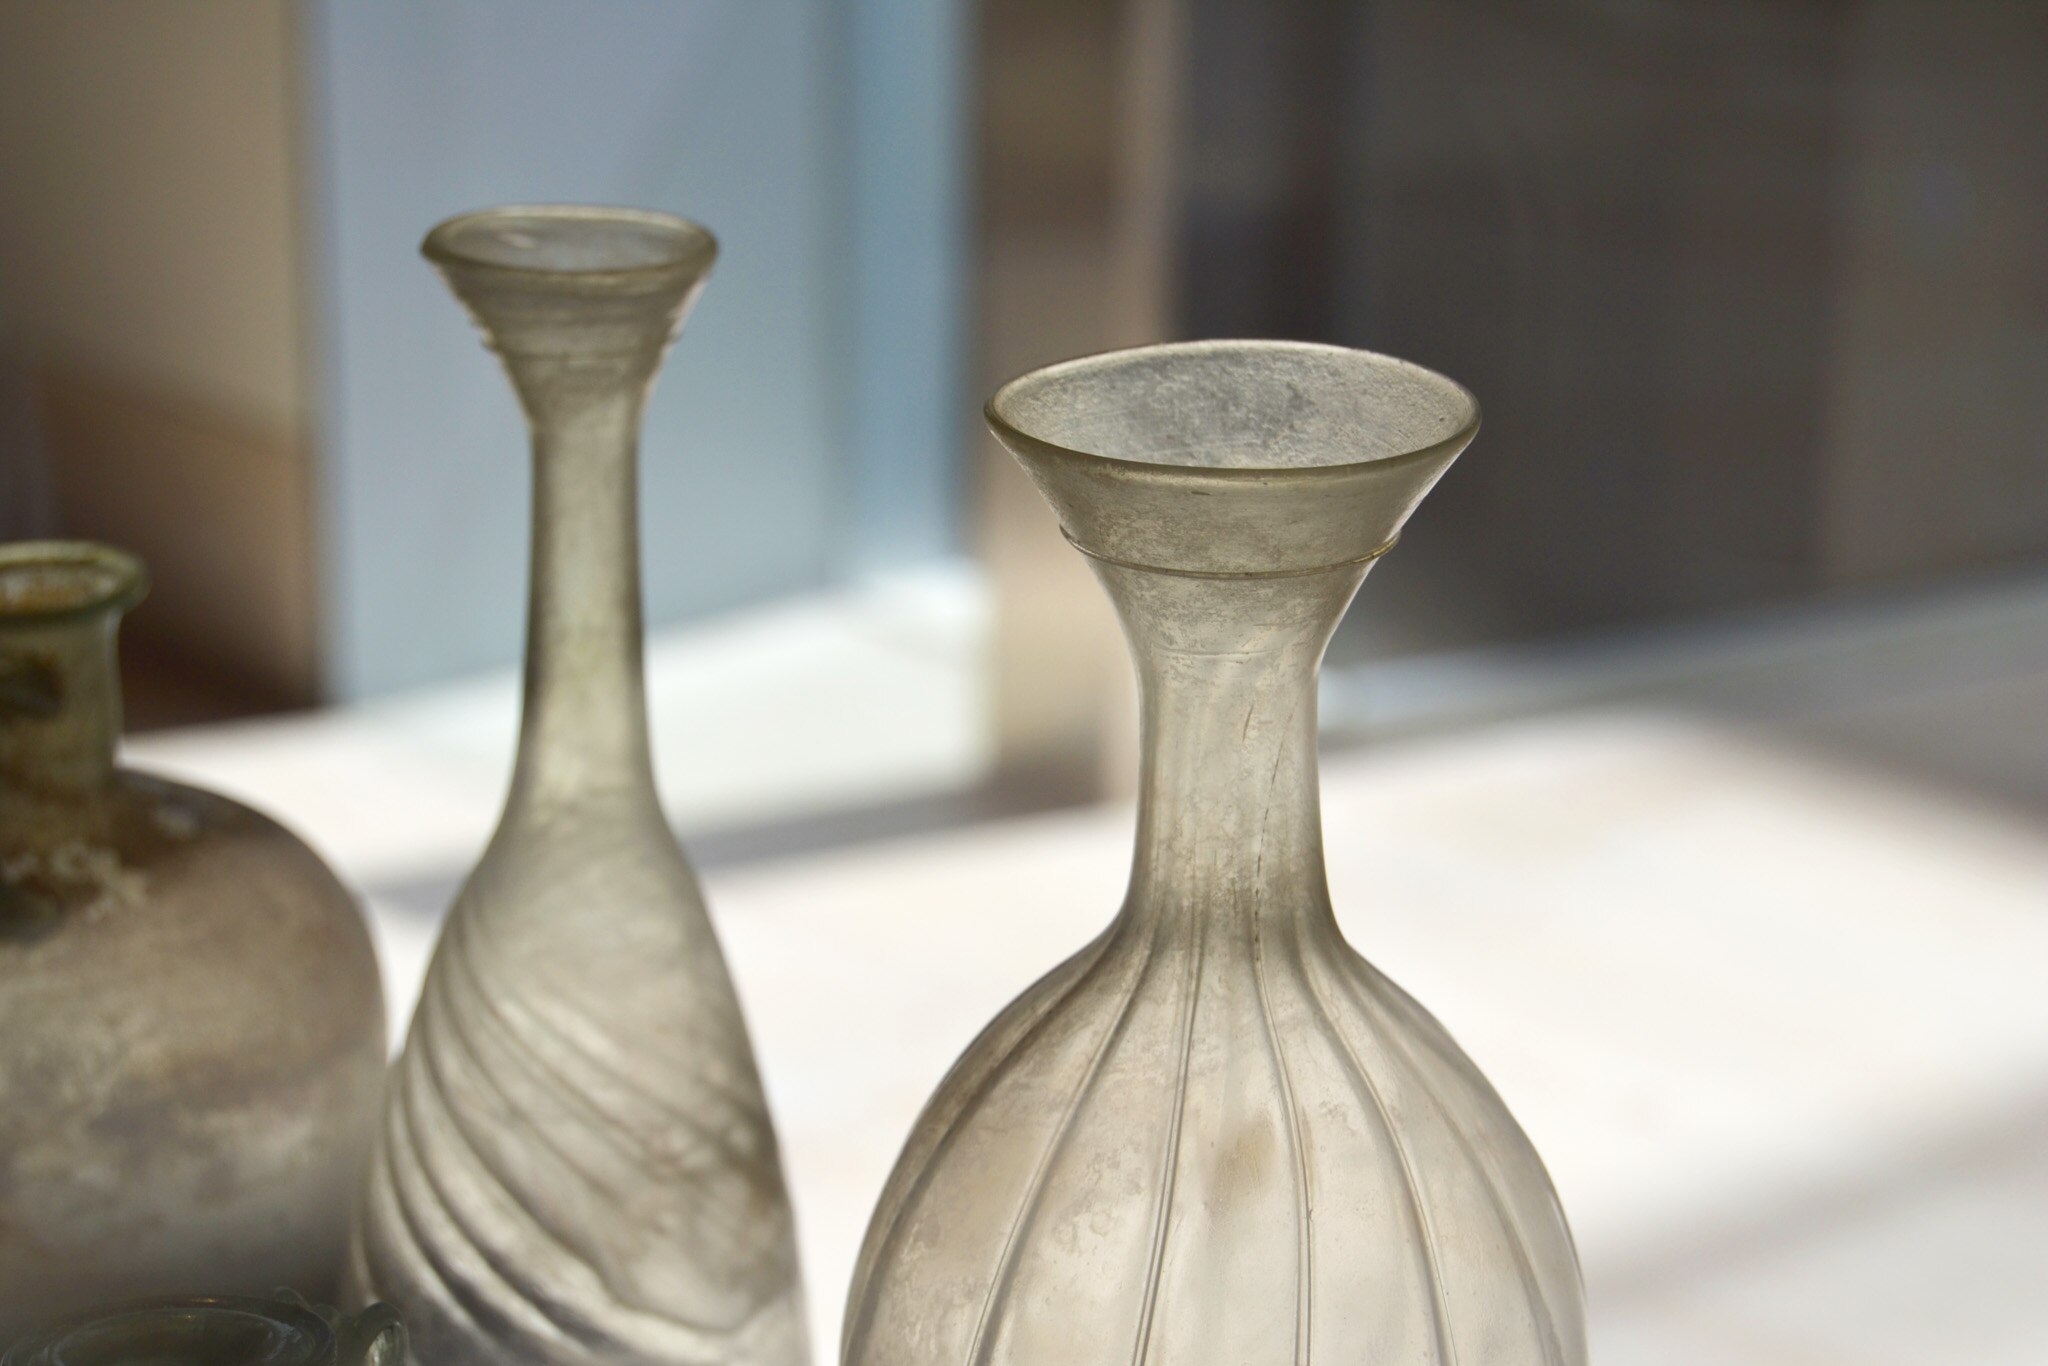 Glass and Ceramic Museum